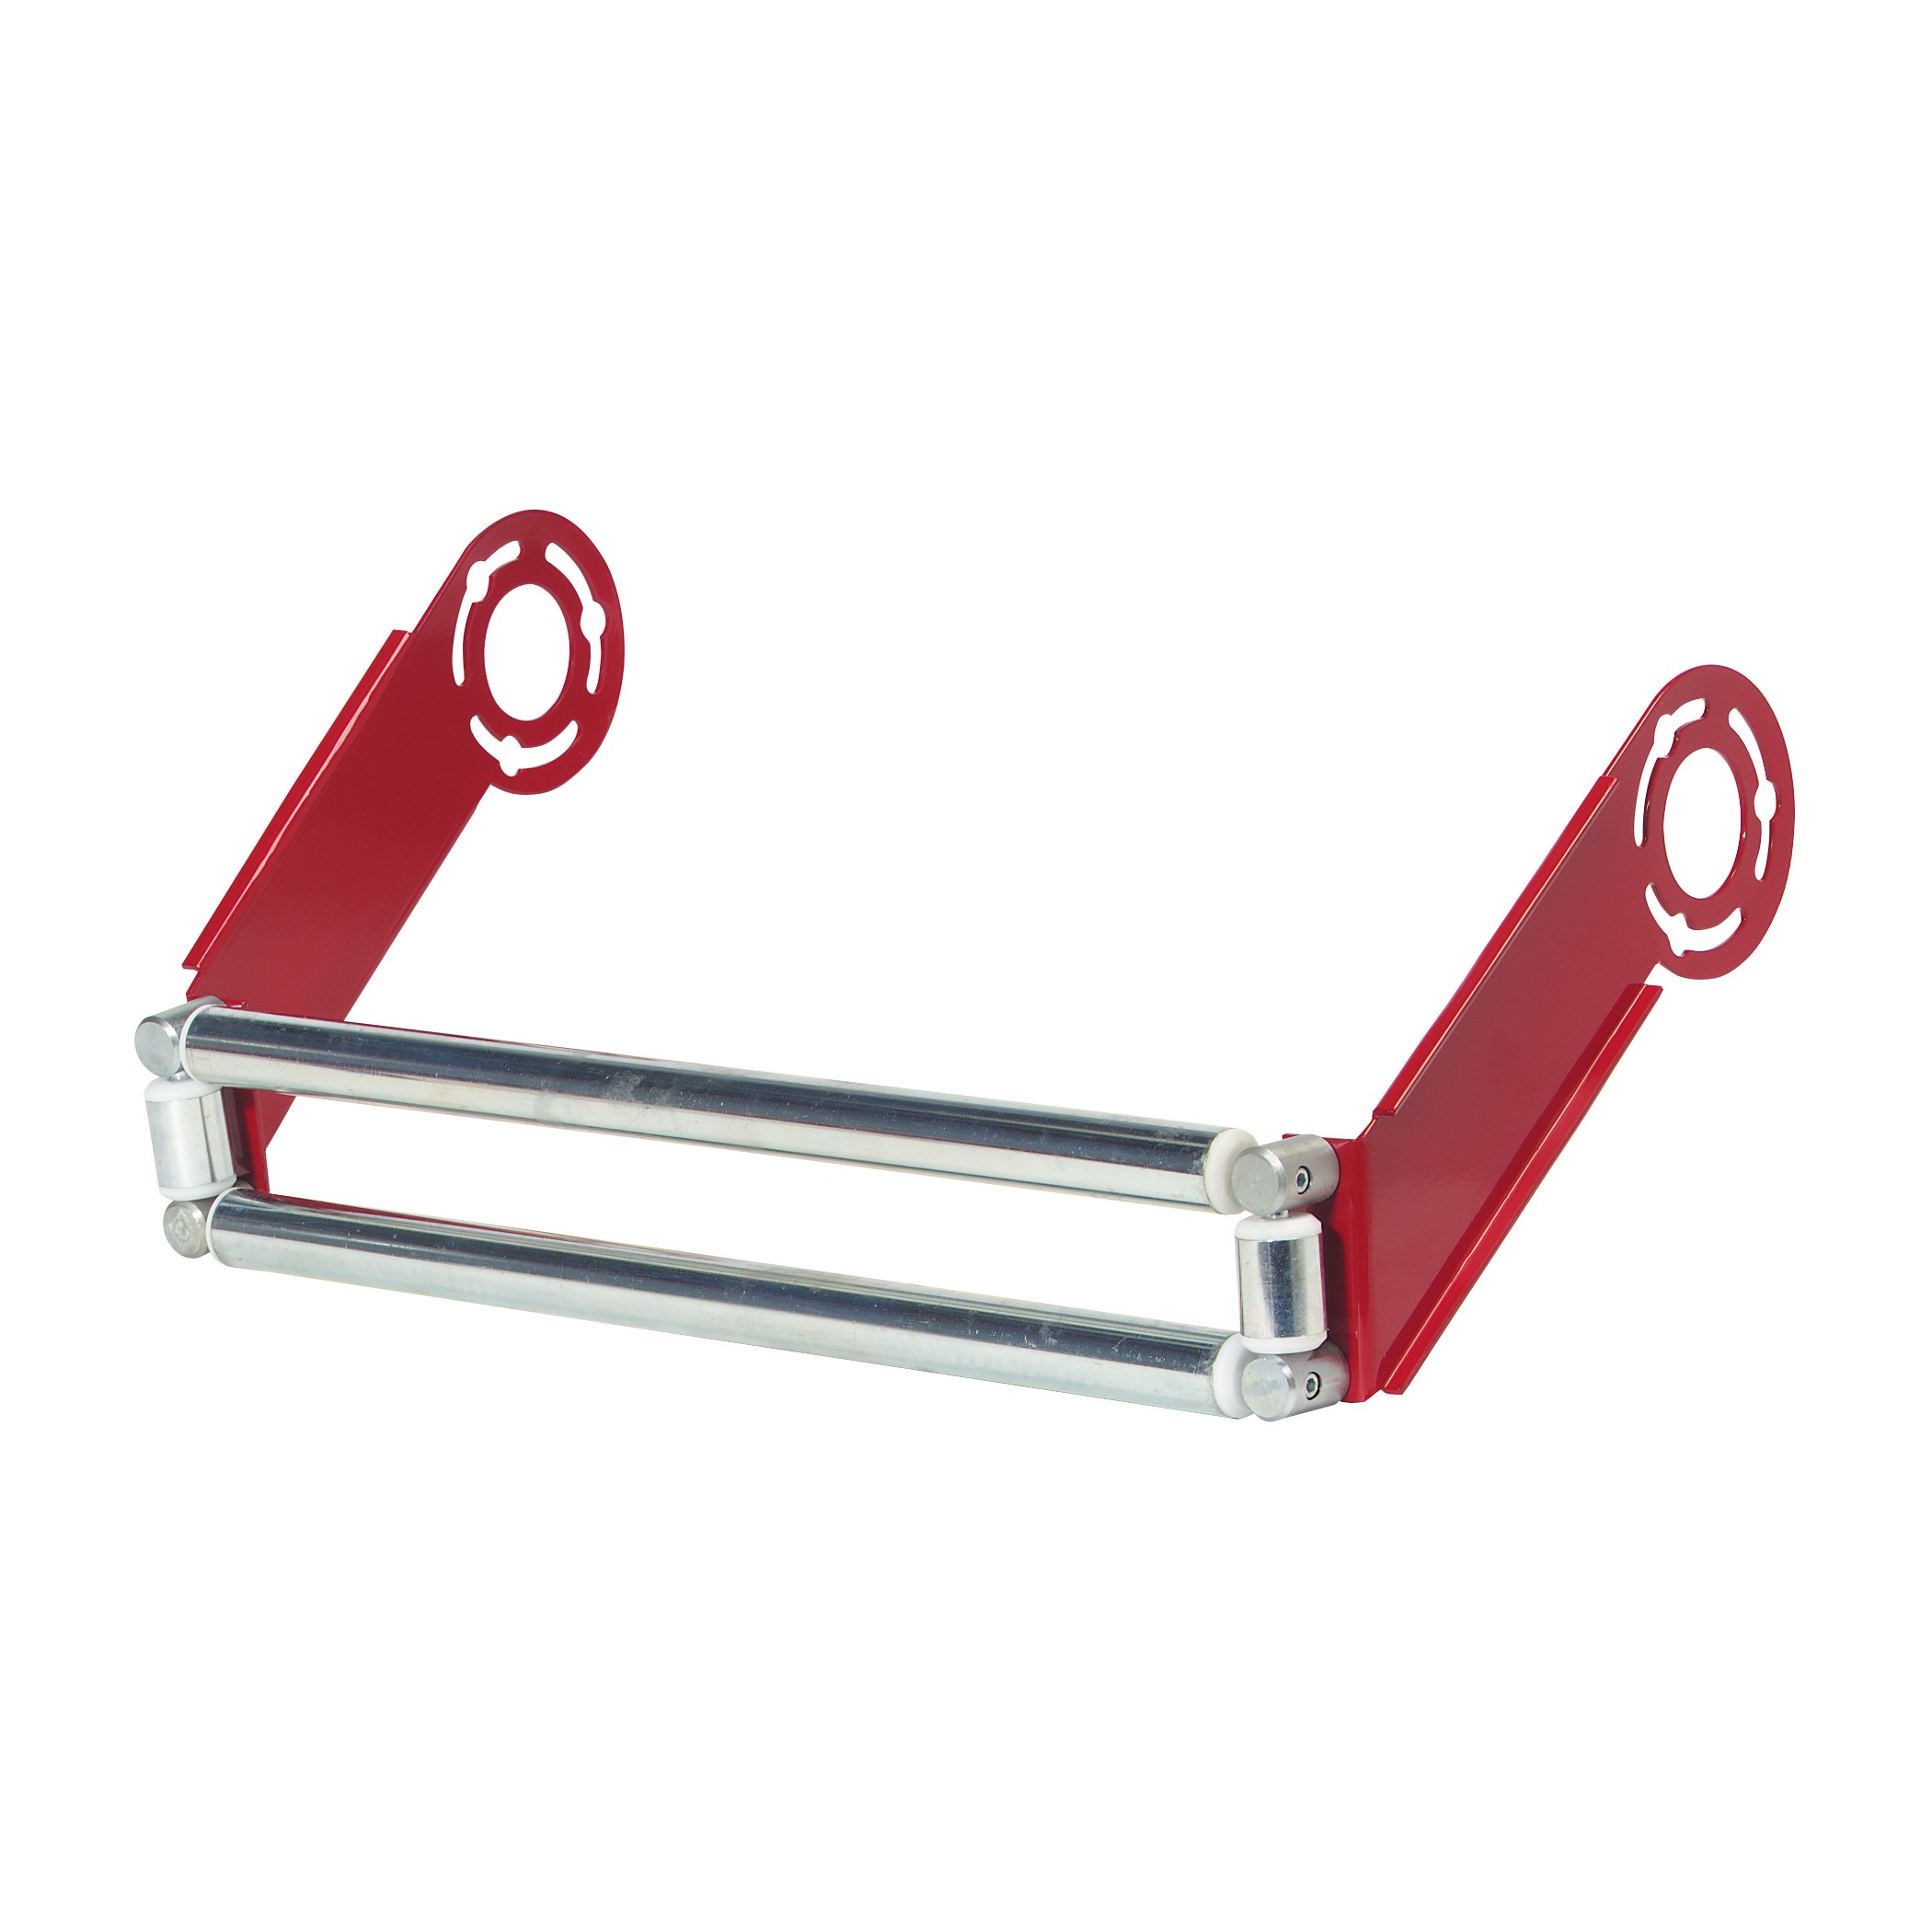 Reelcraft Square Hose Roller Guide 600168 for sale online 